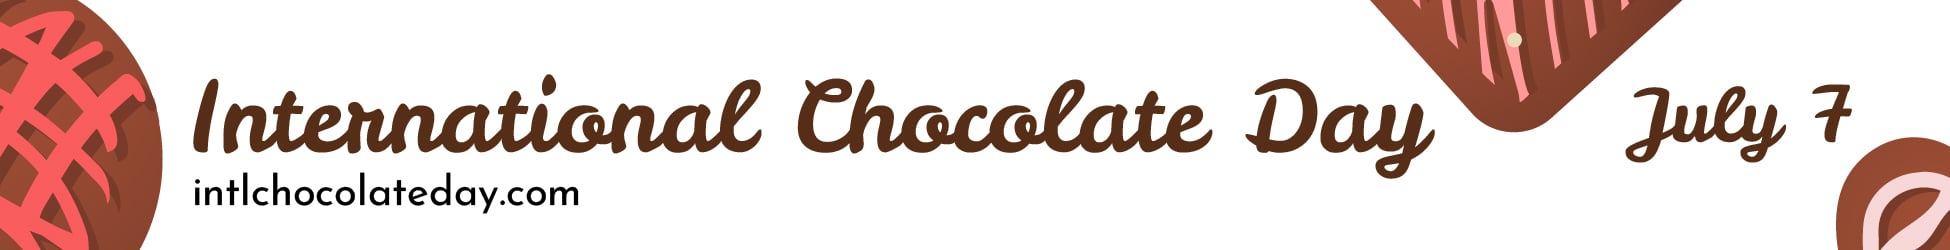 International Chocolate Day Website Banner